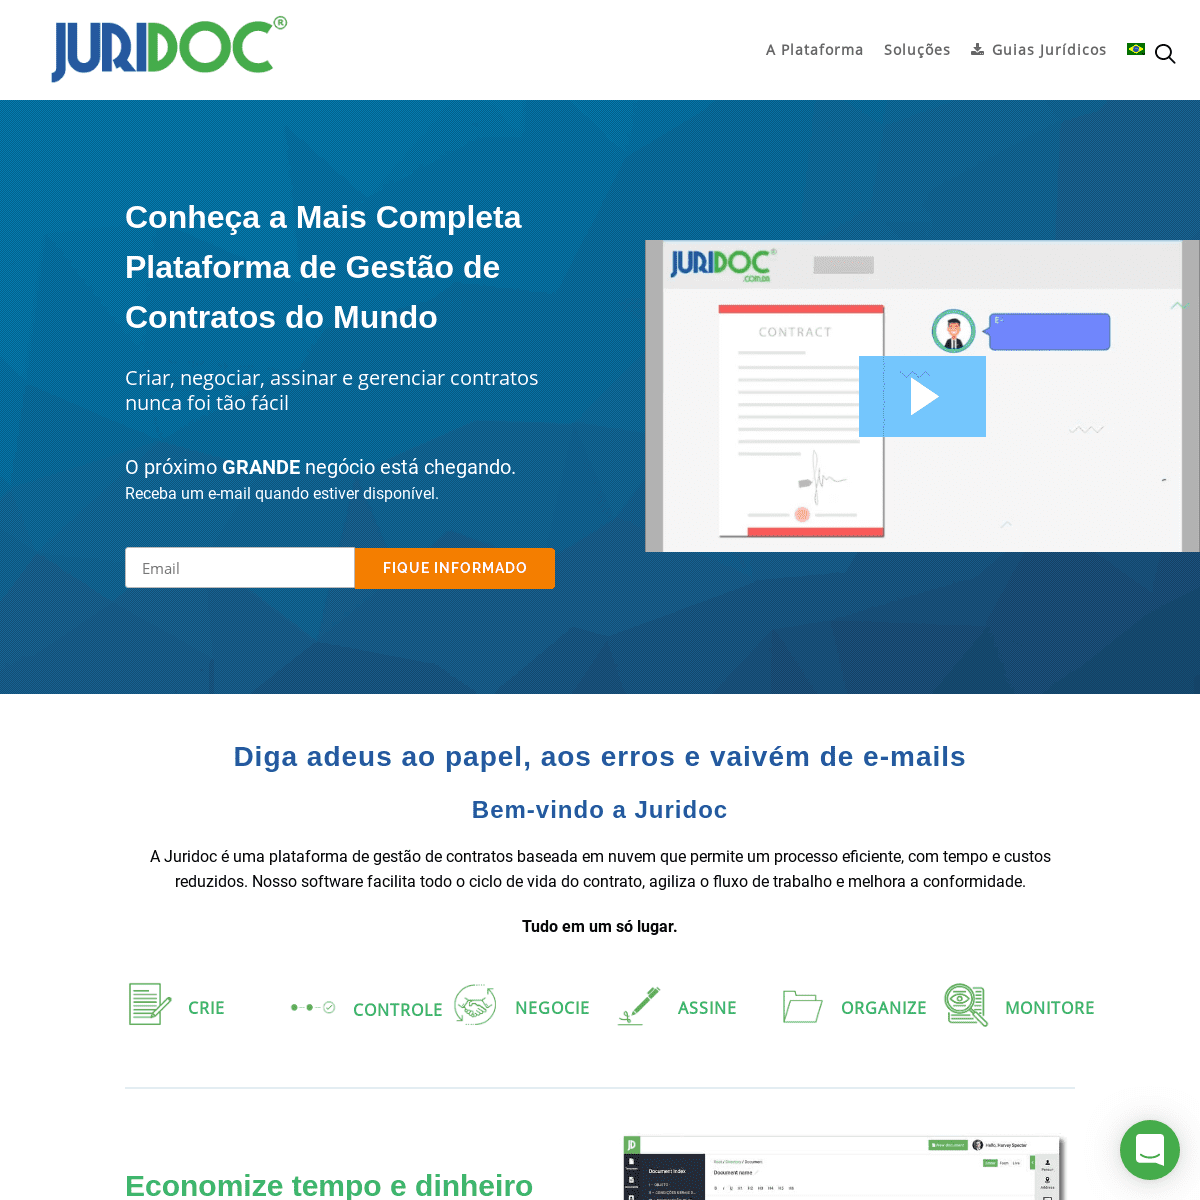 A complete backup of juridoc.com.br